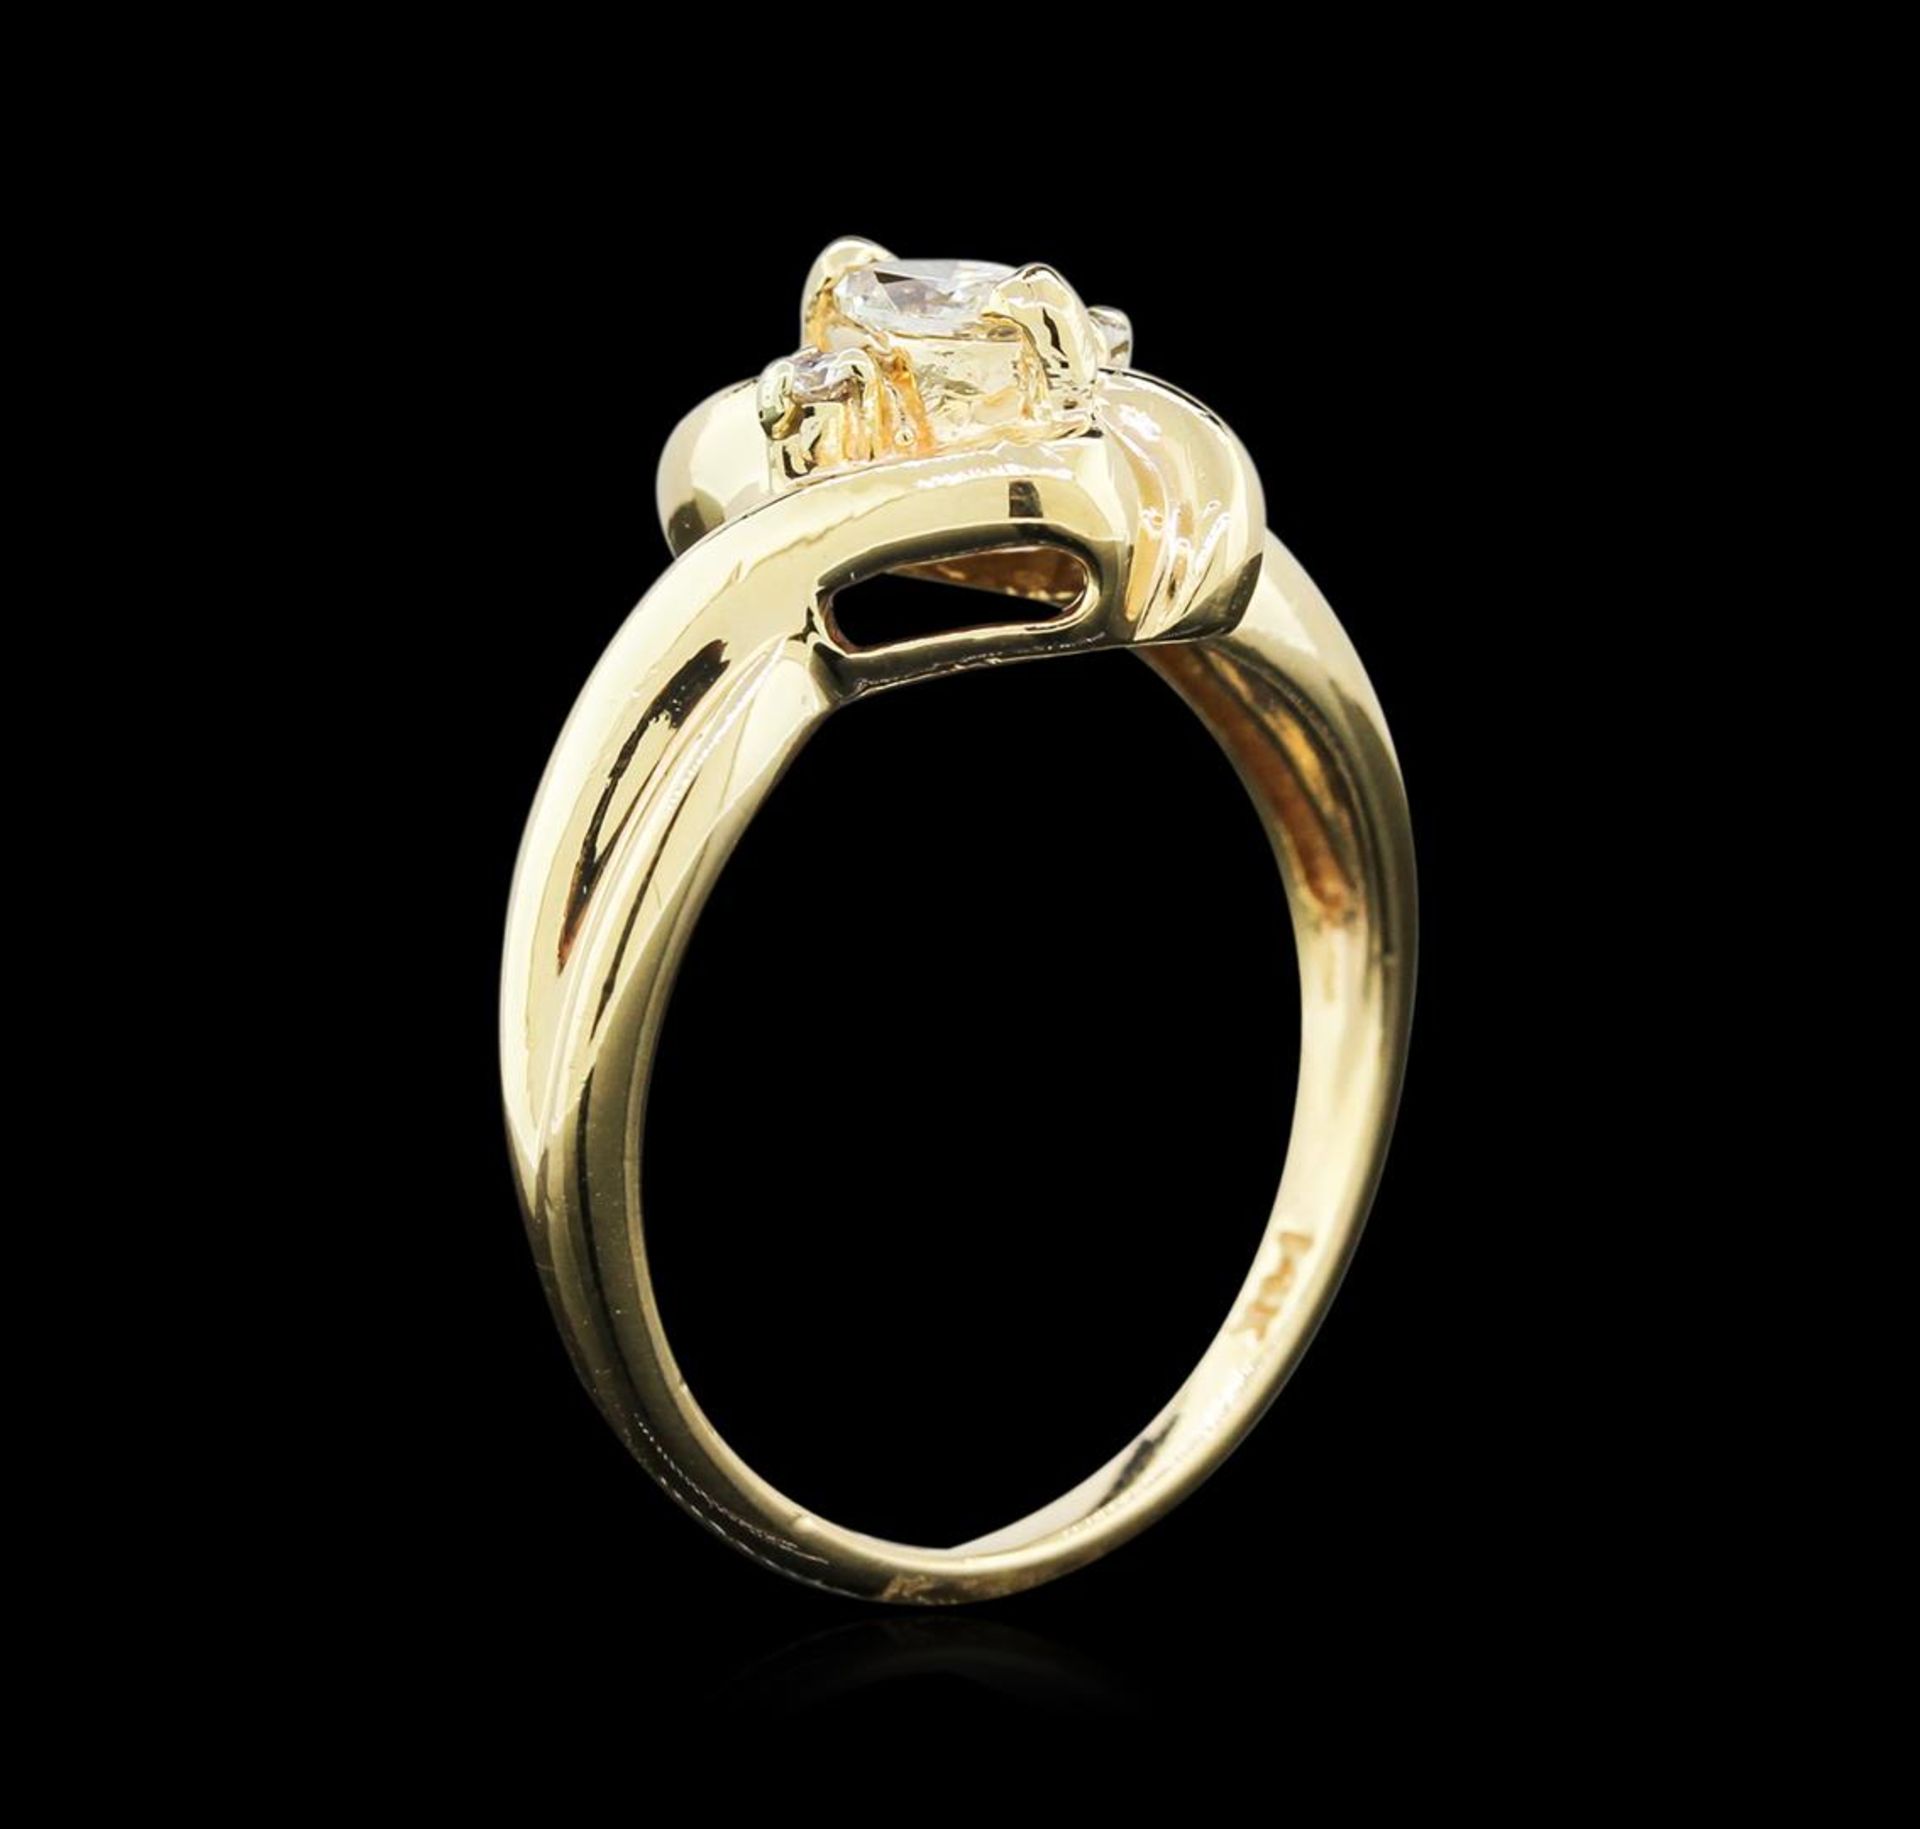 0.30 ctw Diamond Ring - 14KT Yellow Gold - Image 3 of 4